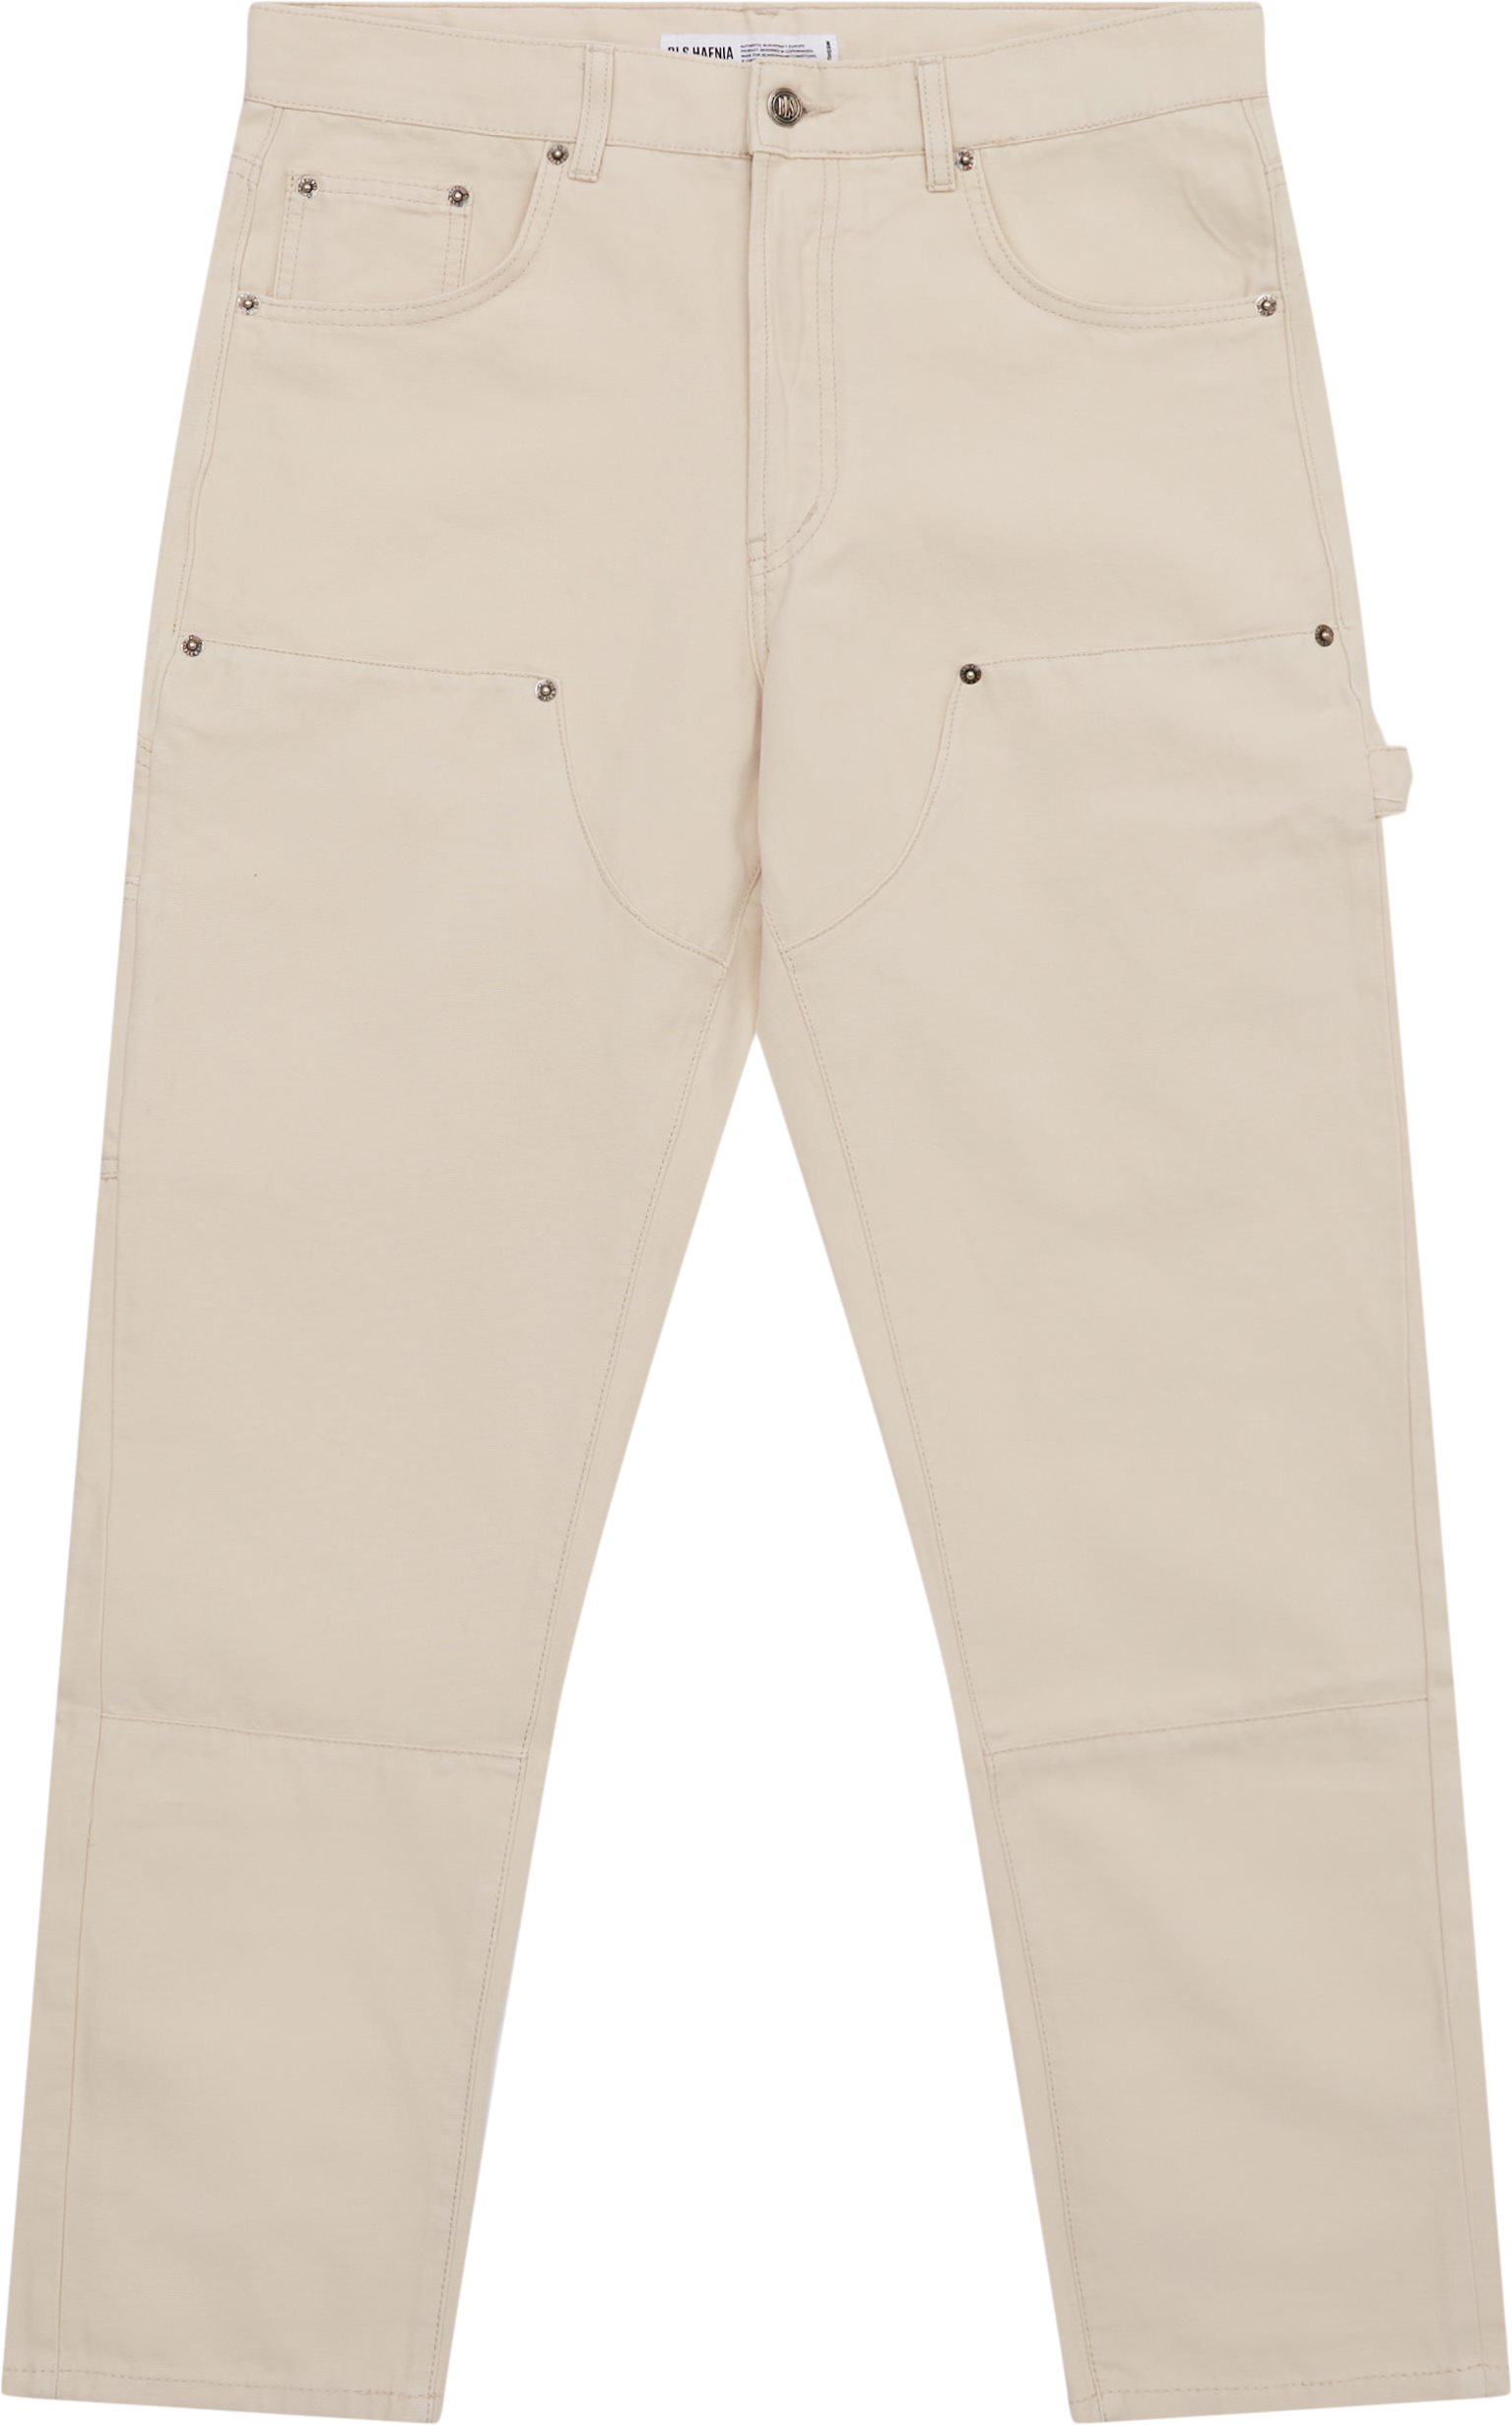 BLS Trousers WORK WEAR PANTS 202303036 Sand